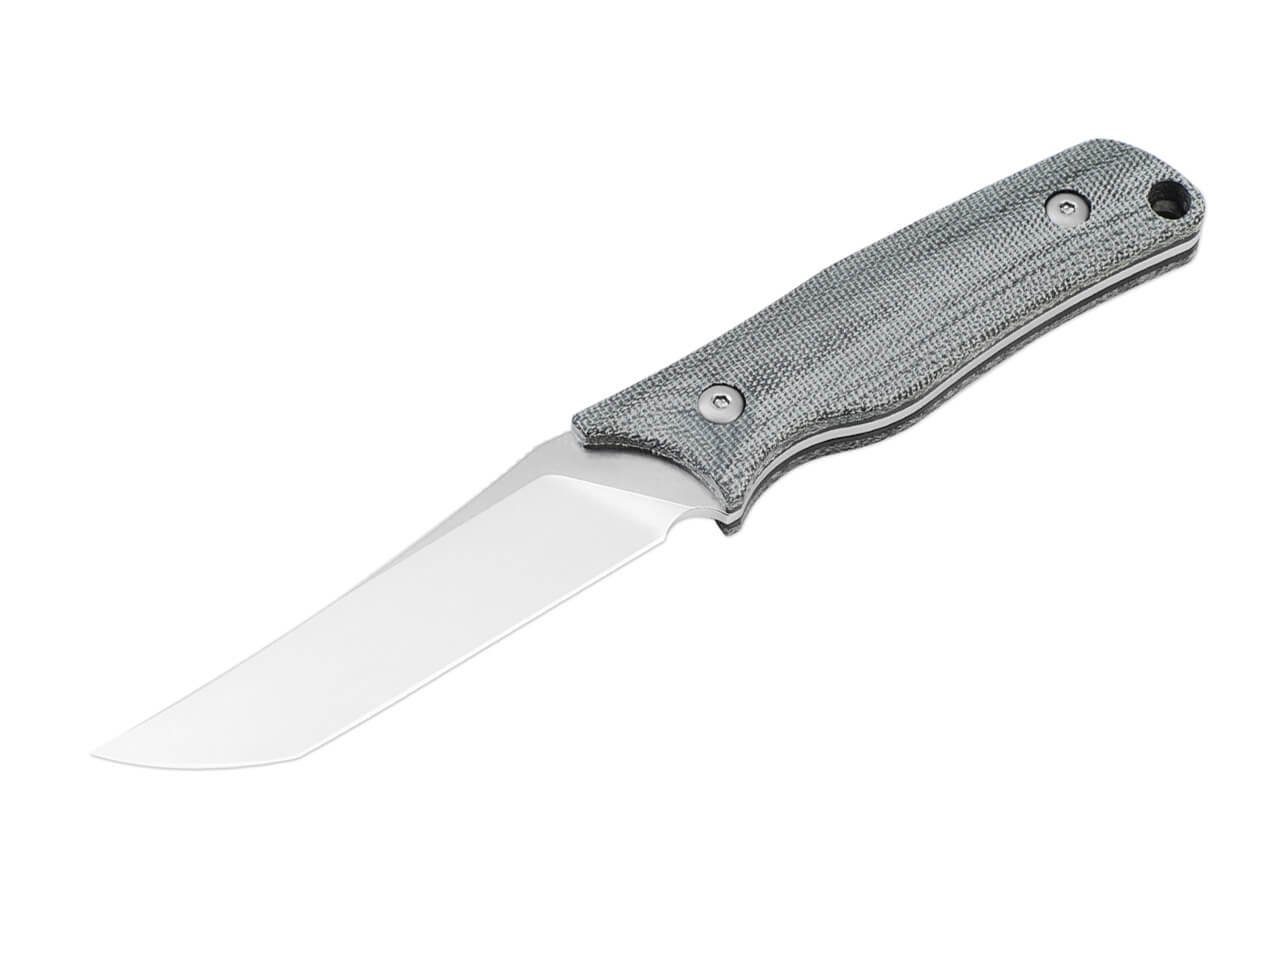 Böker Plus Survival Knife Kizer Elgon Micarta Black feststehendes Messer mit Scheide, (1 St)